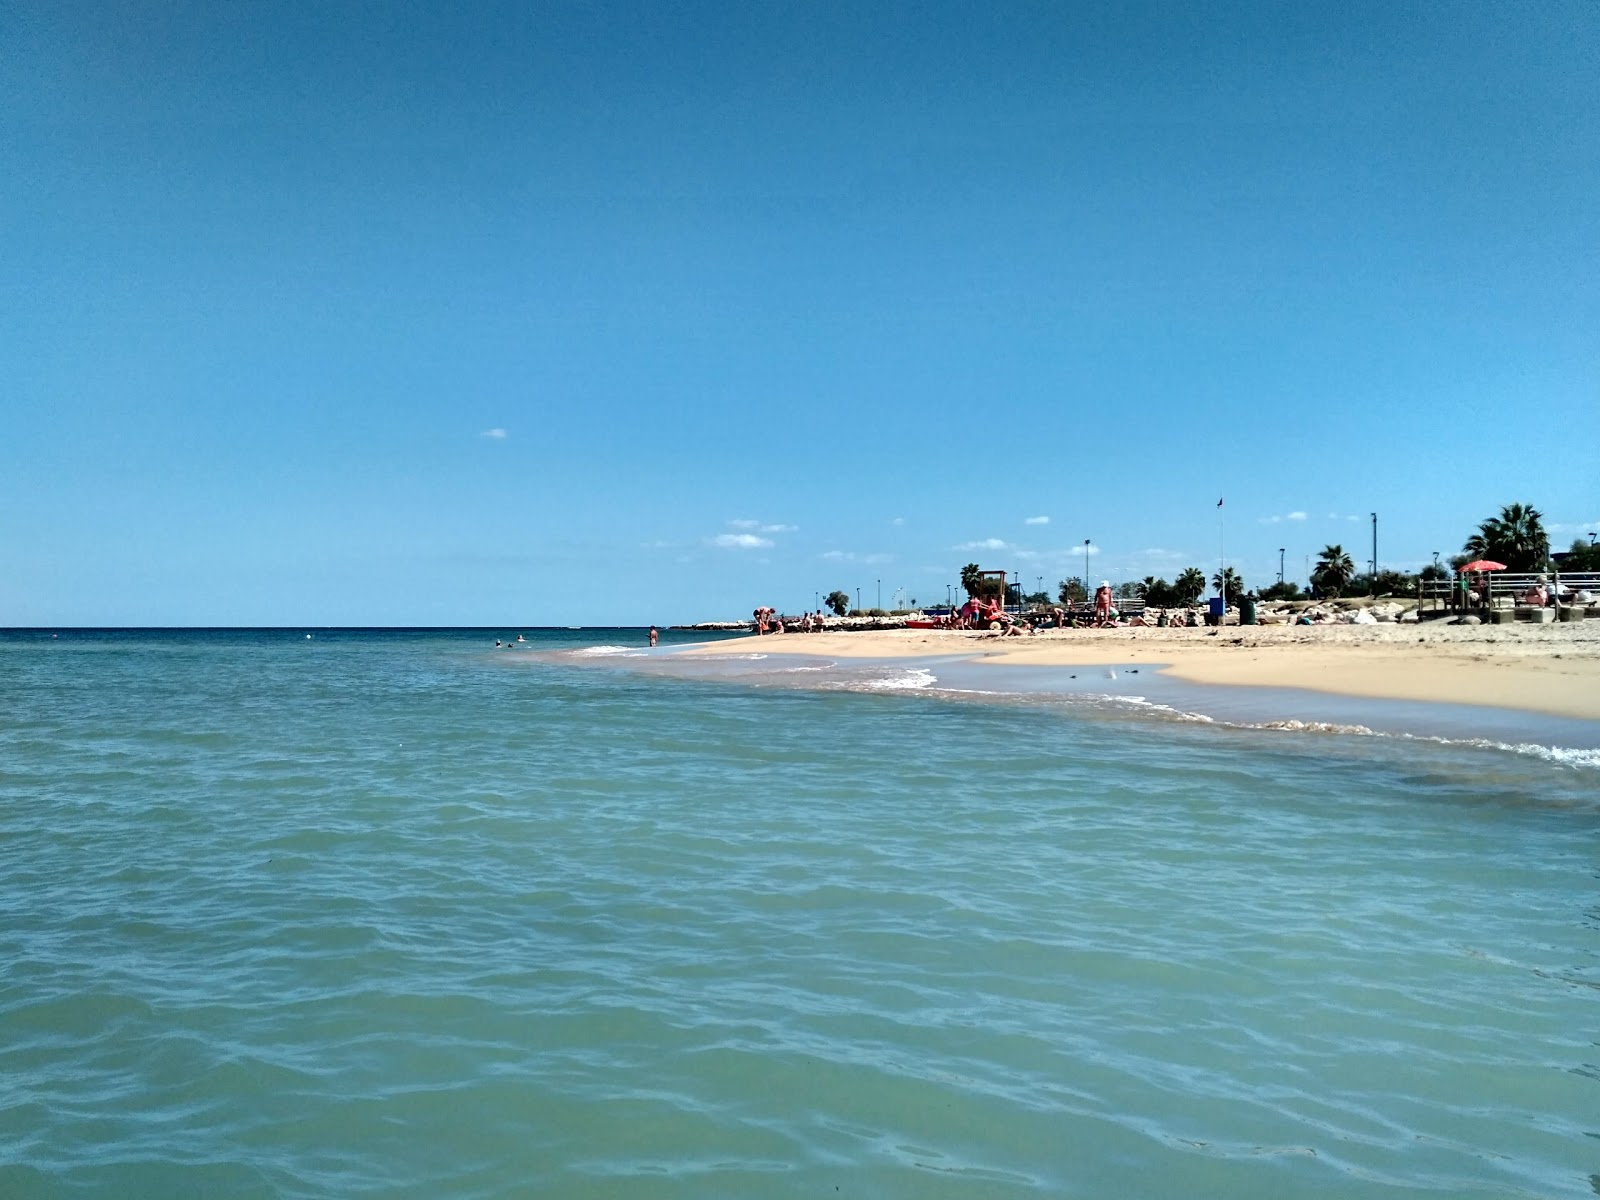 Foto de Spiaggia Pane e Pomodoro con calas medianas